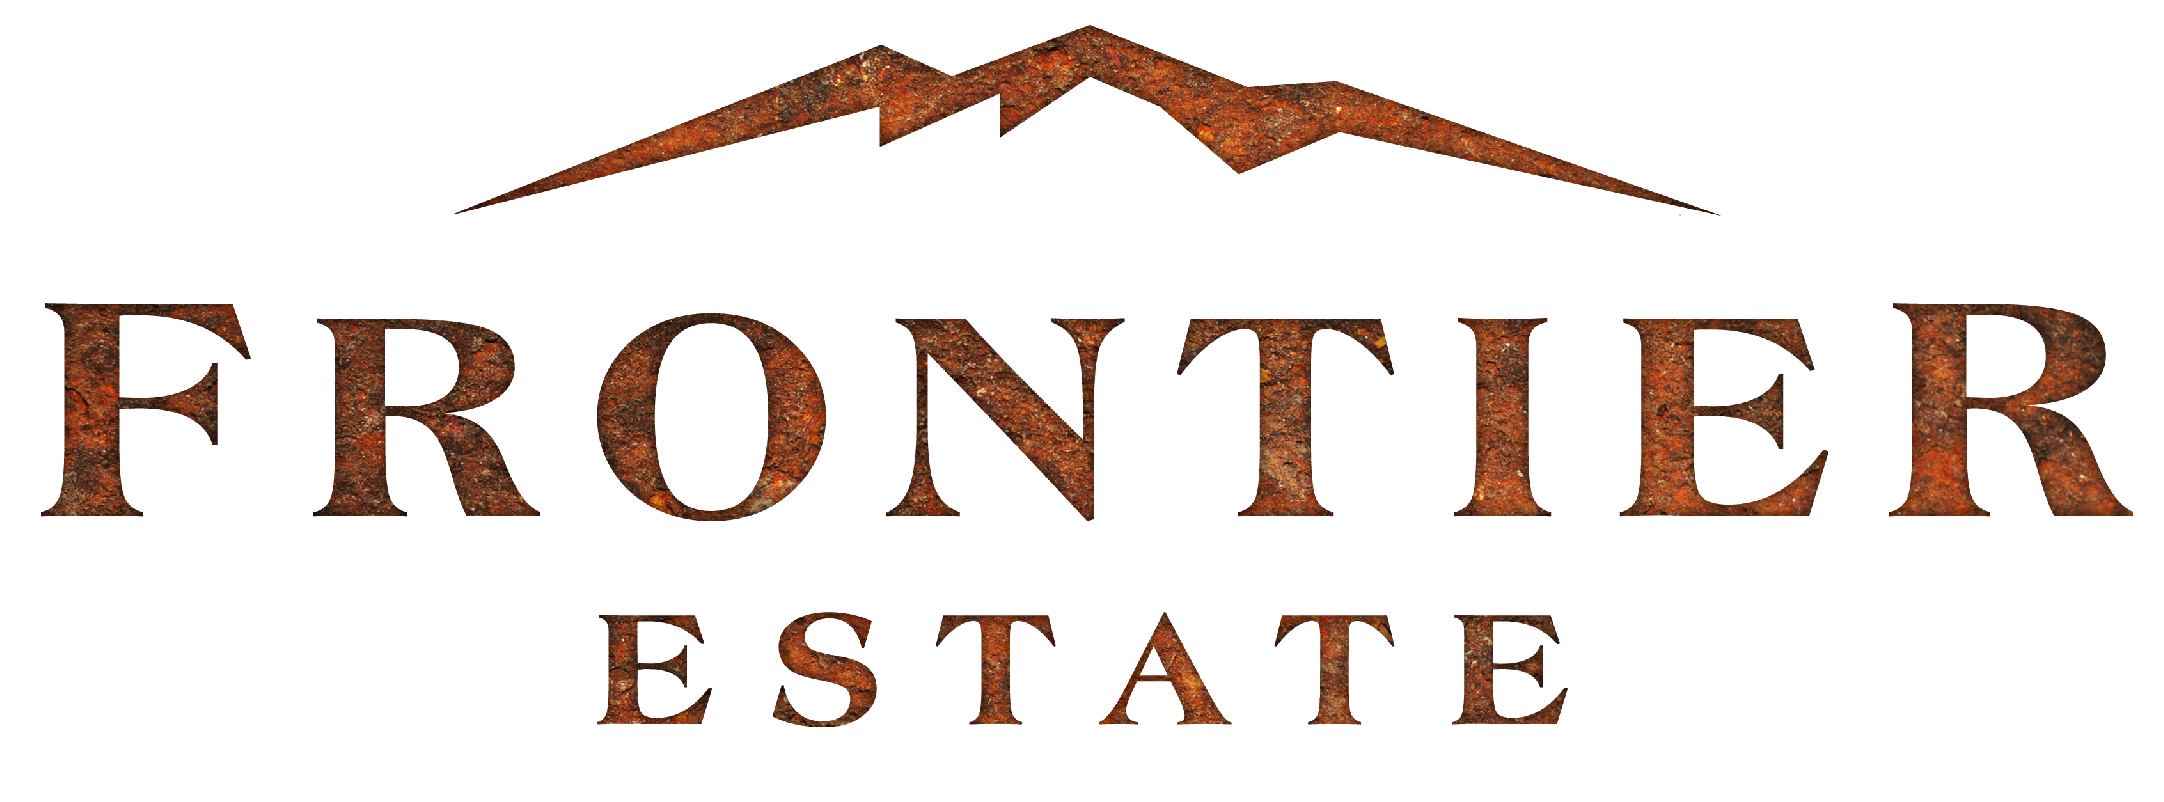 Frontier Estate: Residential Subdivision – Design Management ...